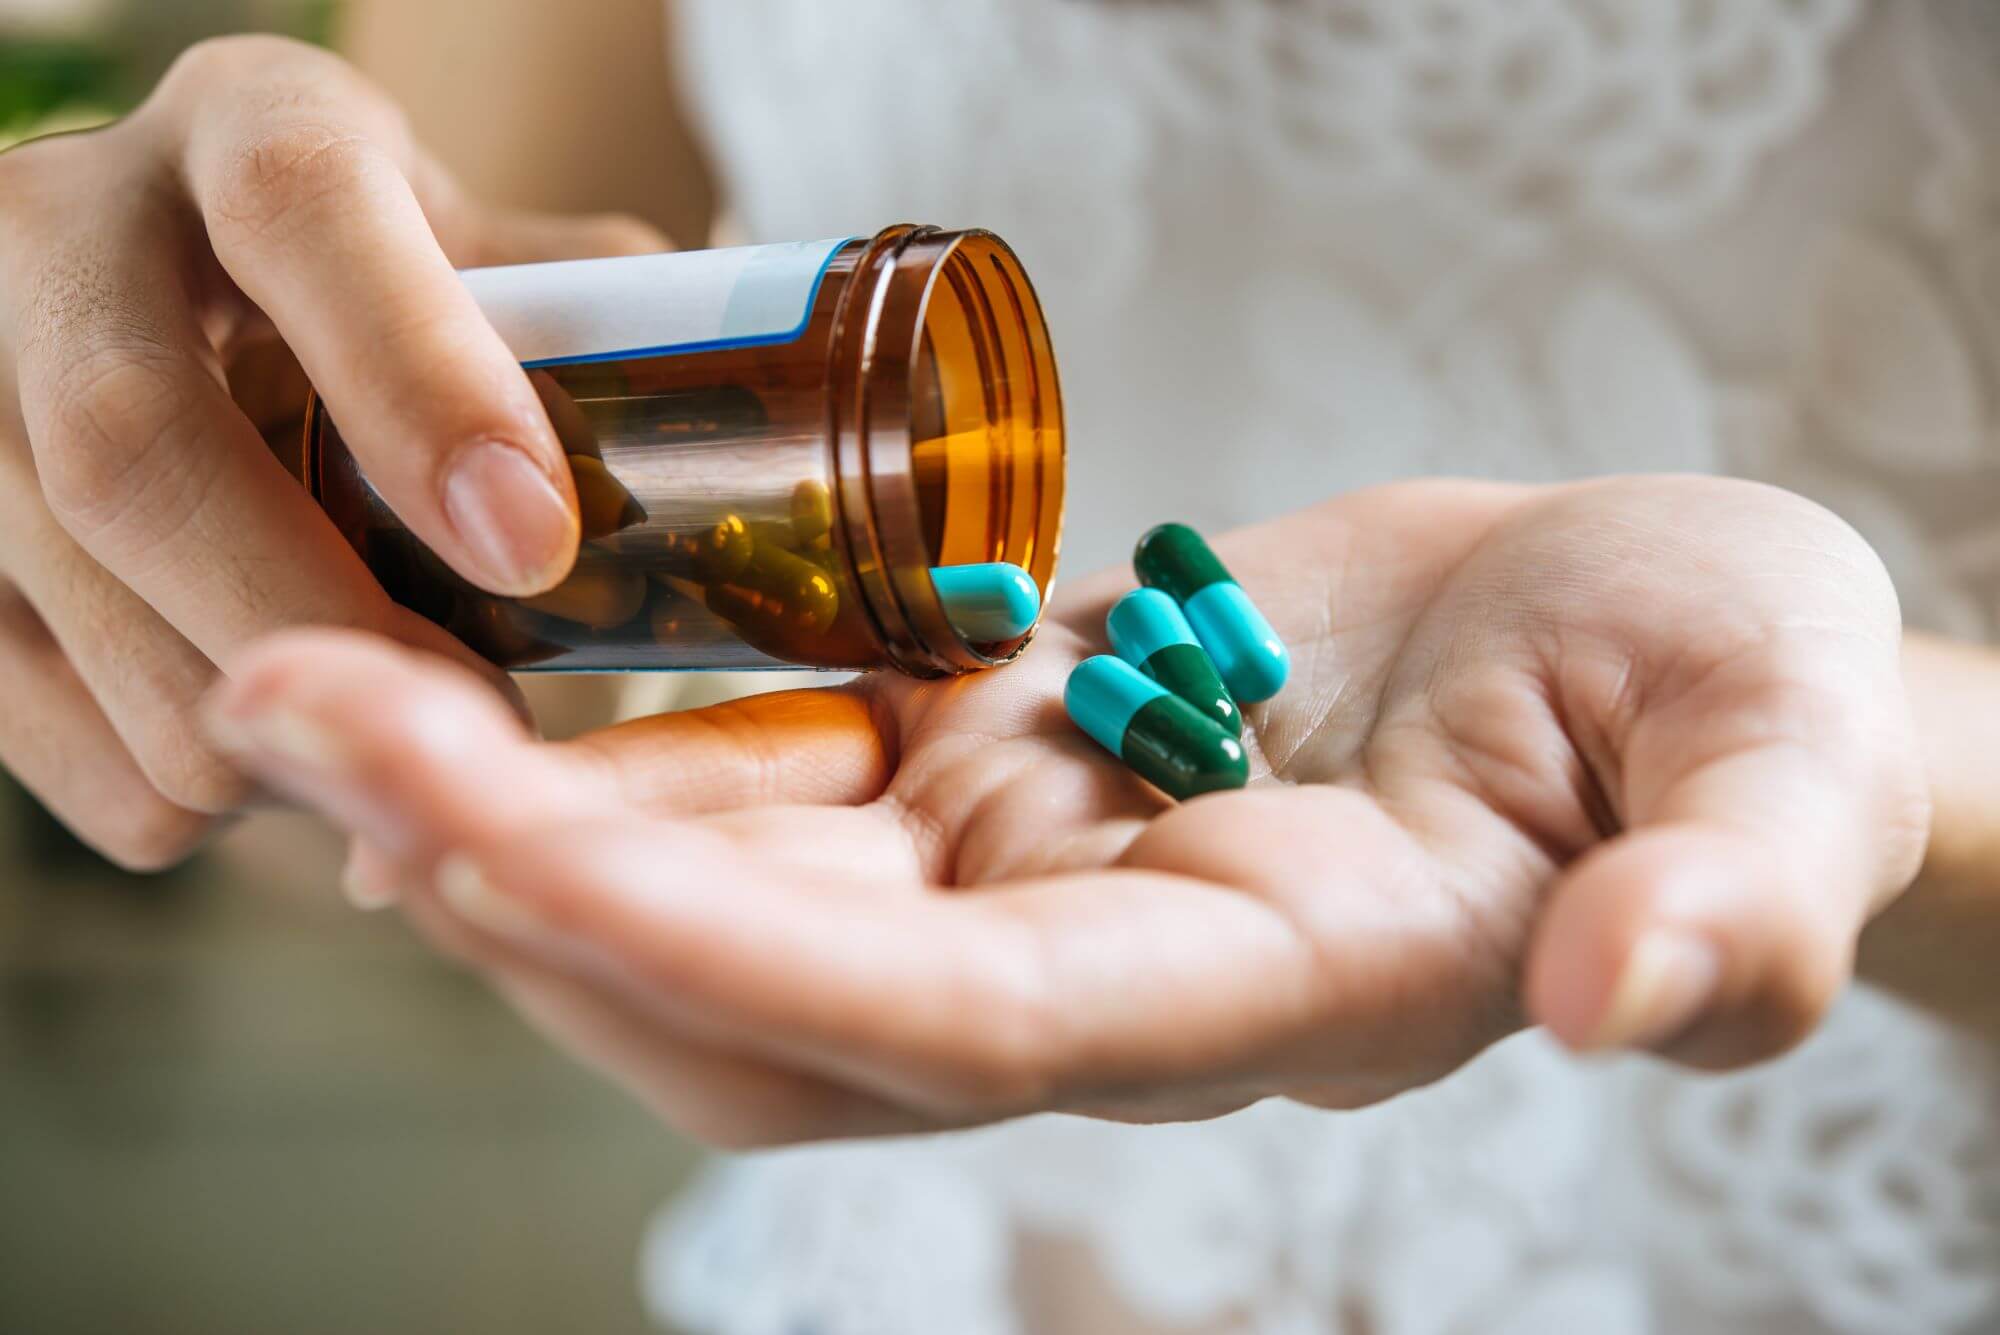 Co grozi za zakup tabletek poronnych?